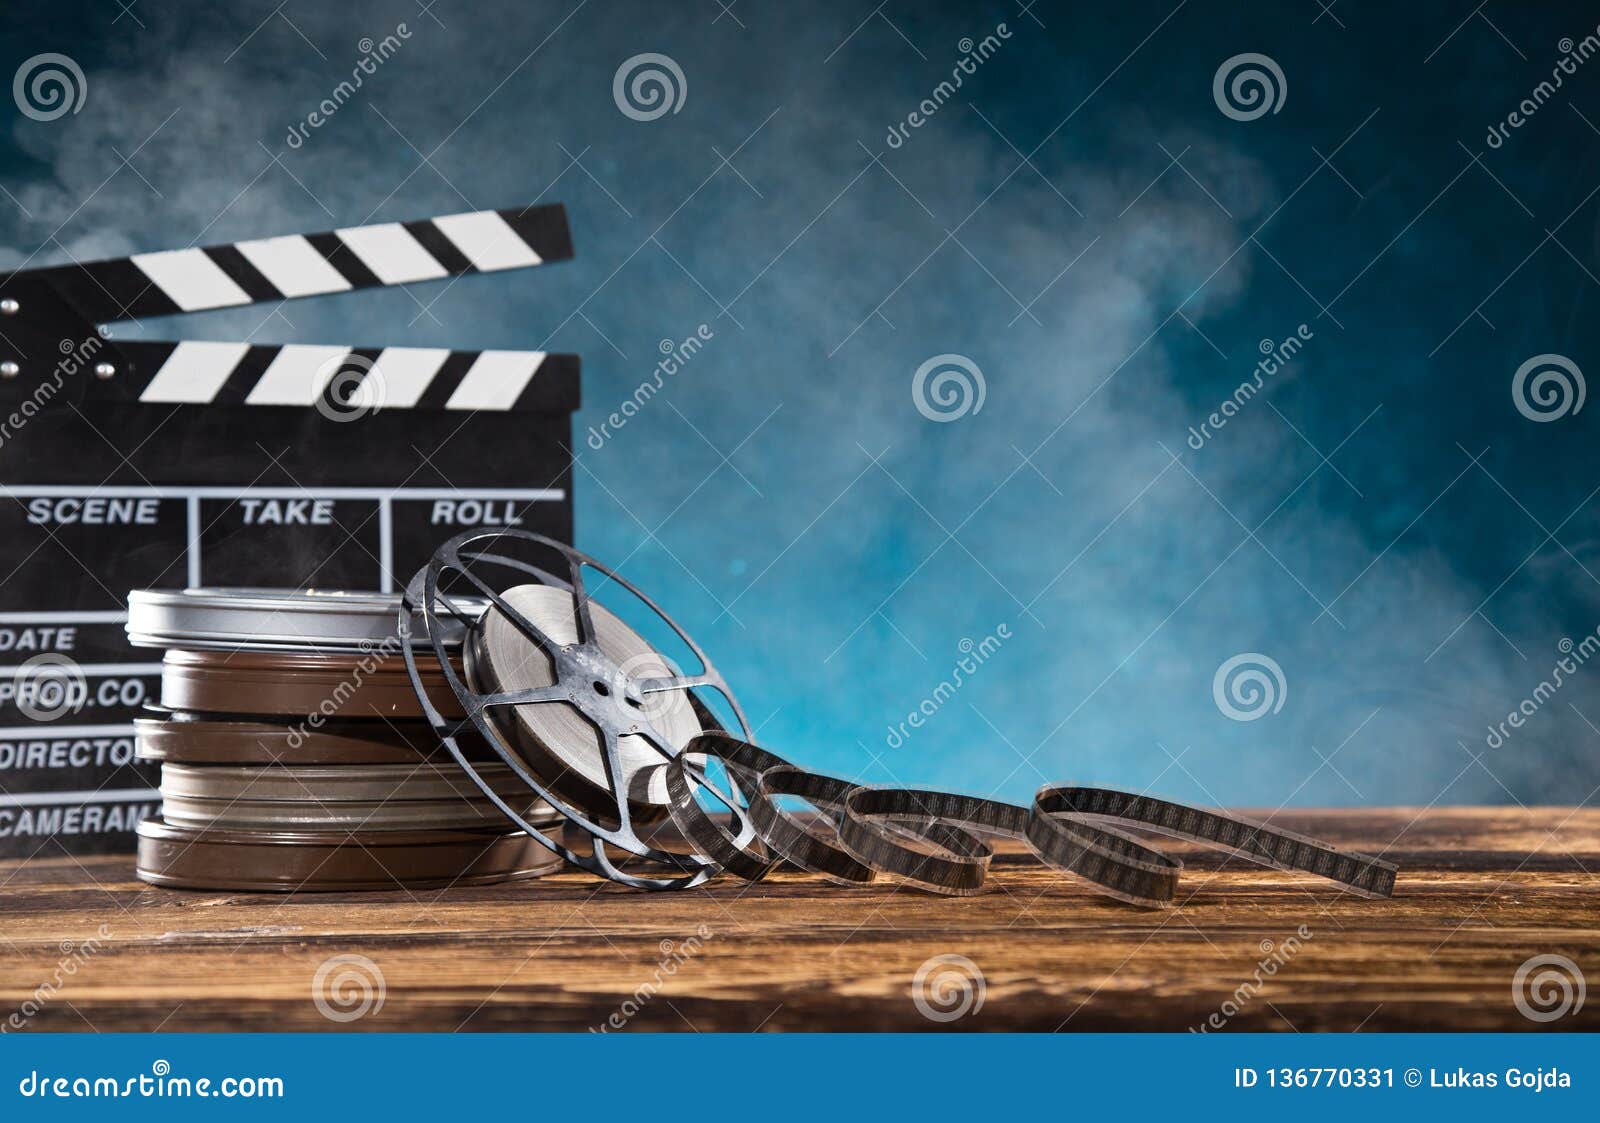 Cinema Concept of Vintage Film Reel with Popcorn. Stock Image